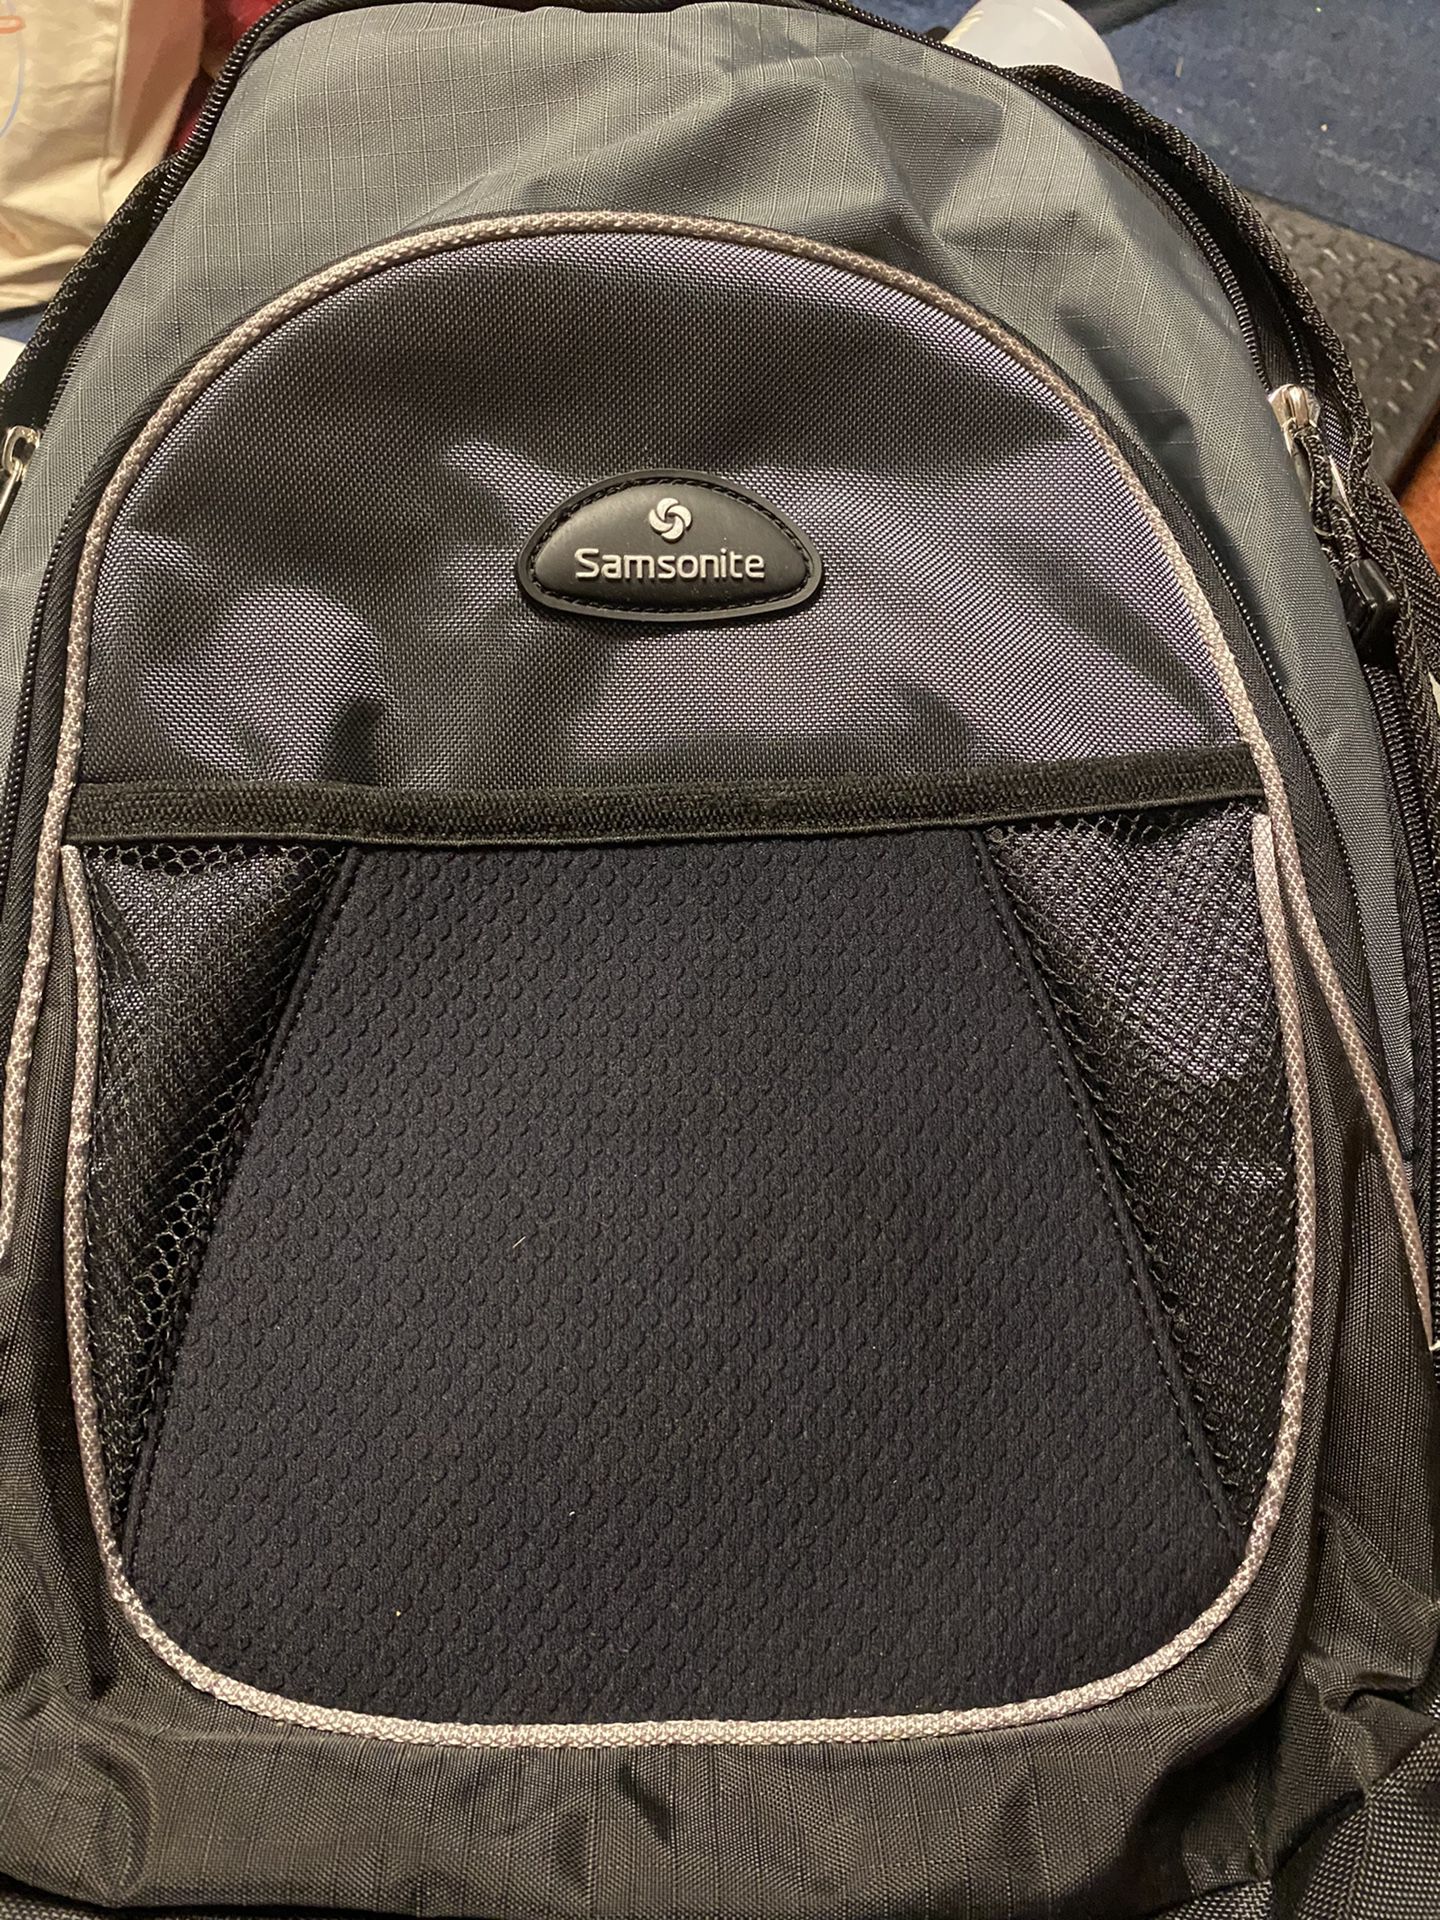 New Samsonite computer laptop backpack